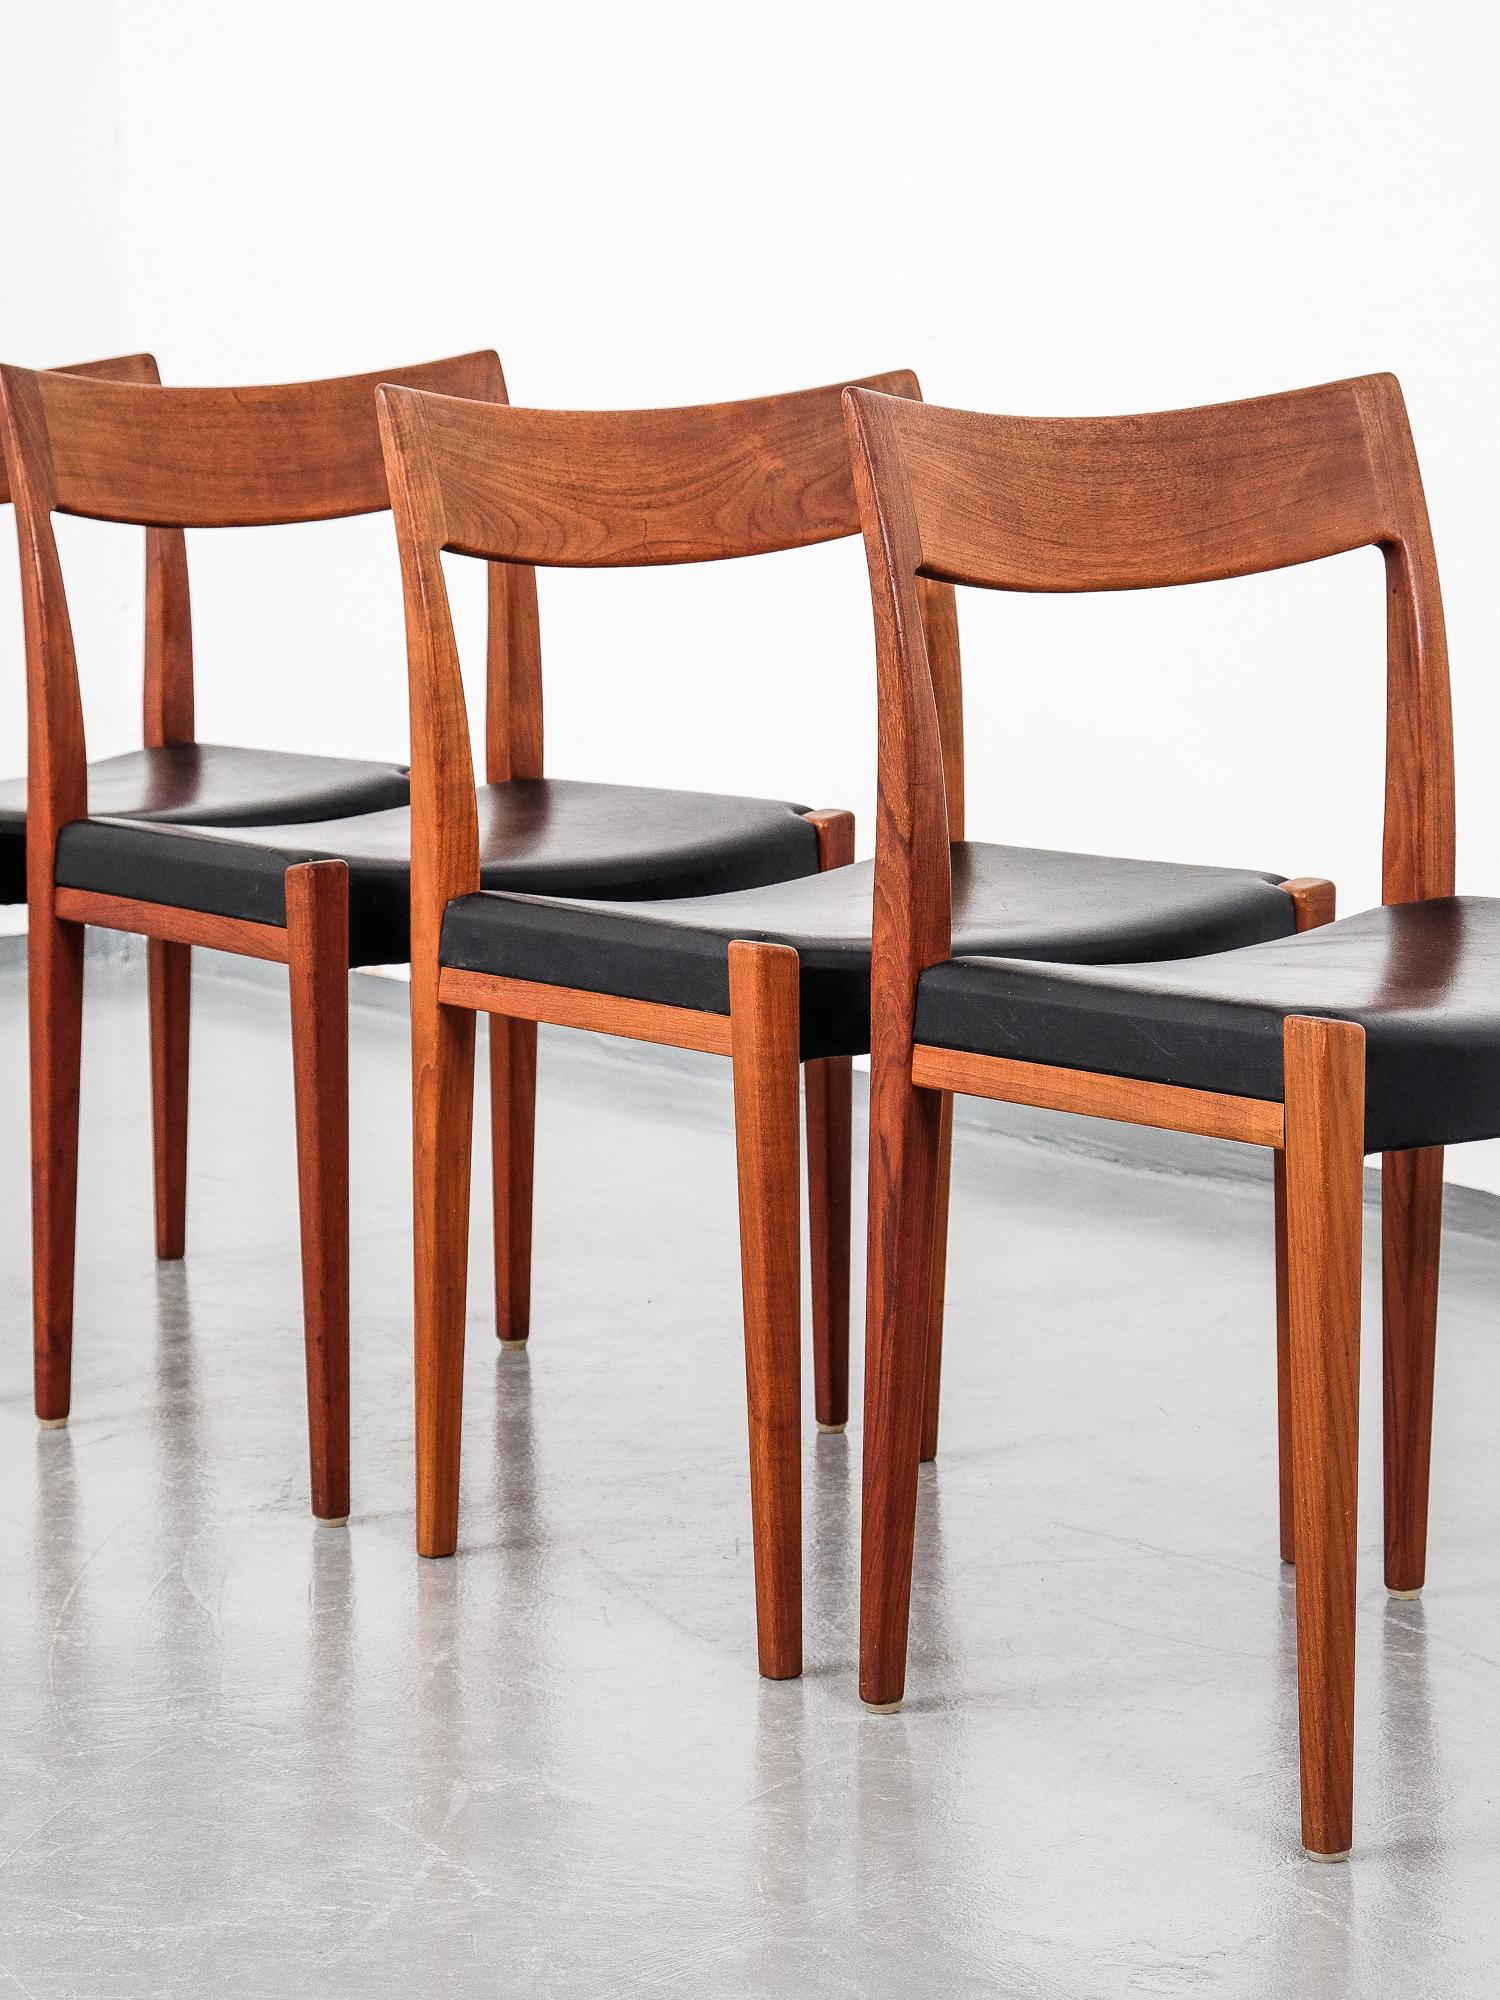 Mid-20th Century 'Kontiki' Teak Dining Chairs by Yngve Ekström for Troeds, Set of 4